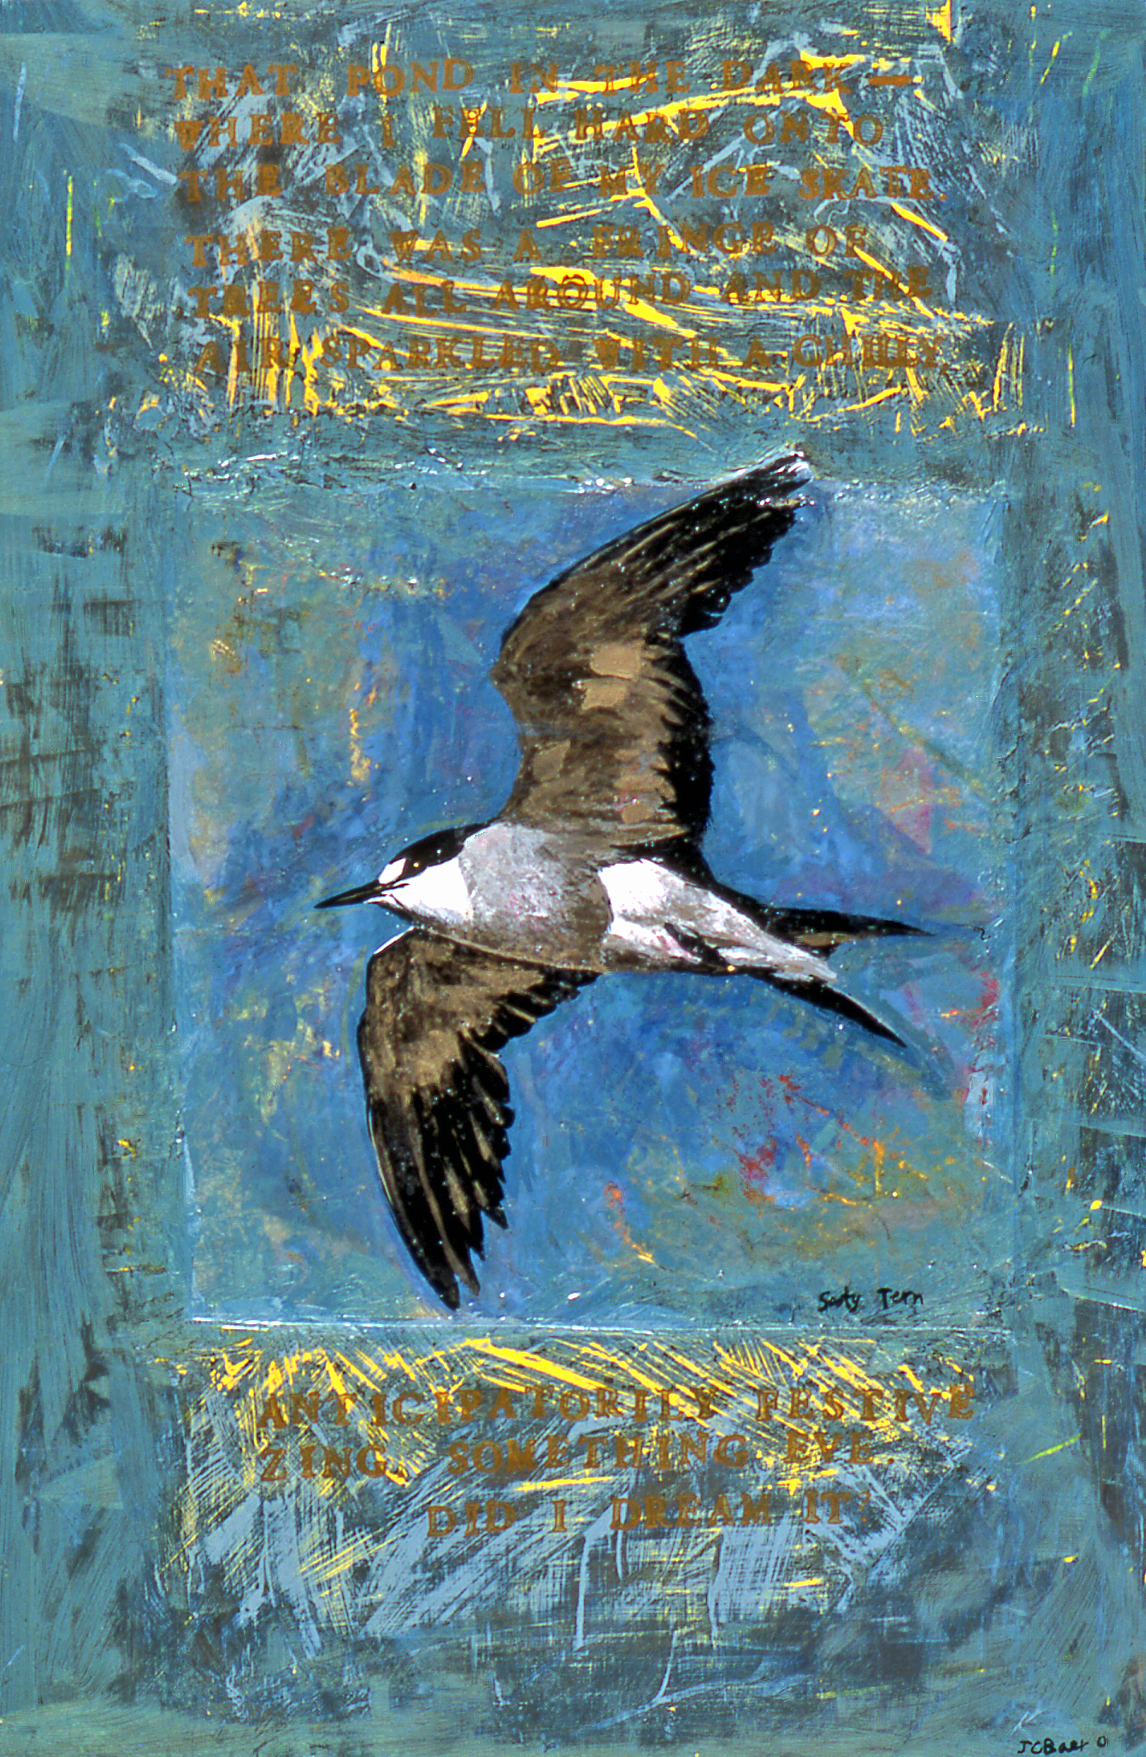 Sooty Tern, 2001, 24 x 16, mixed media gouache on wood panel, $800